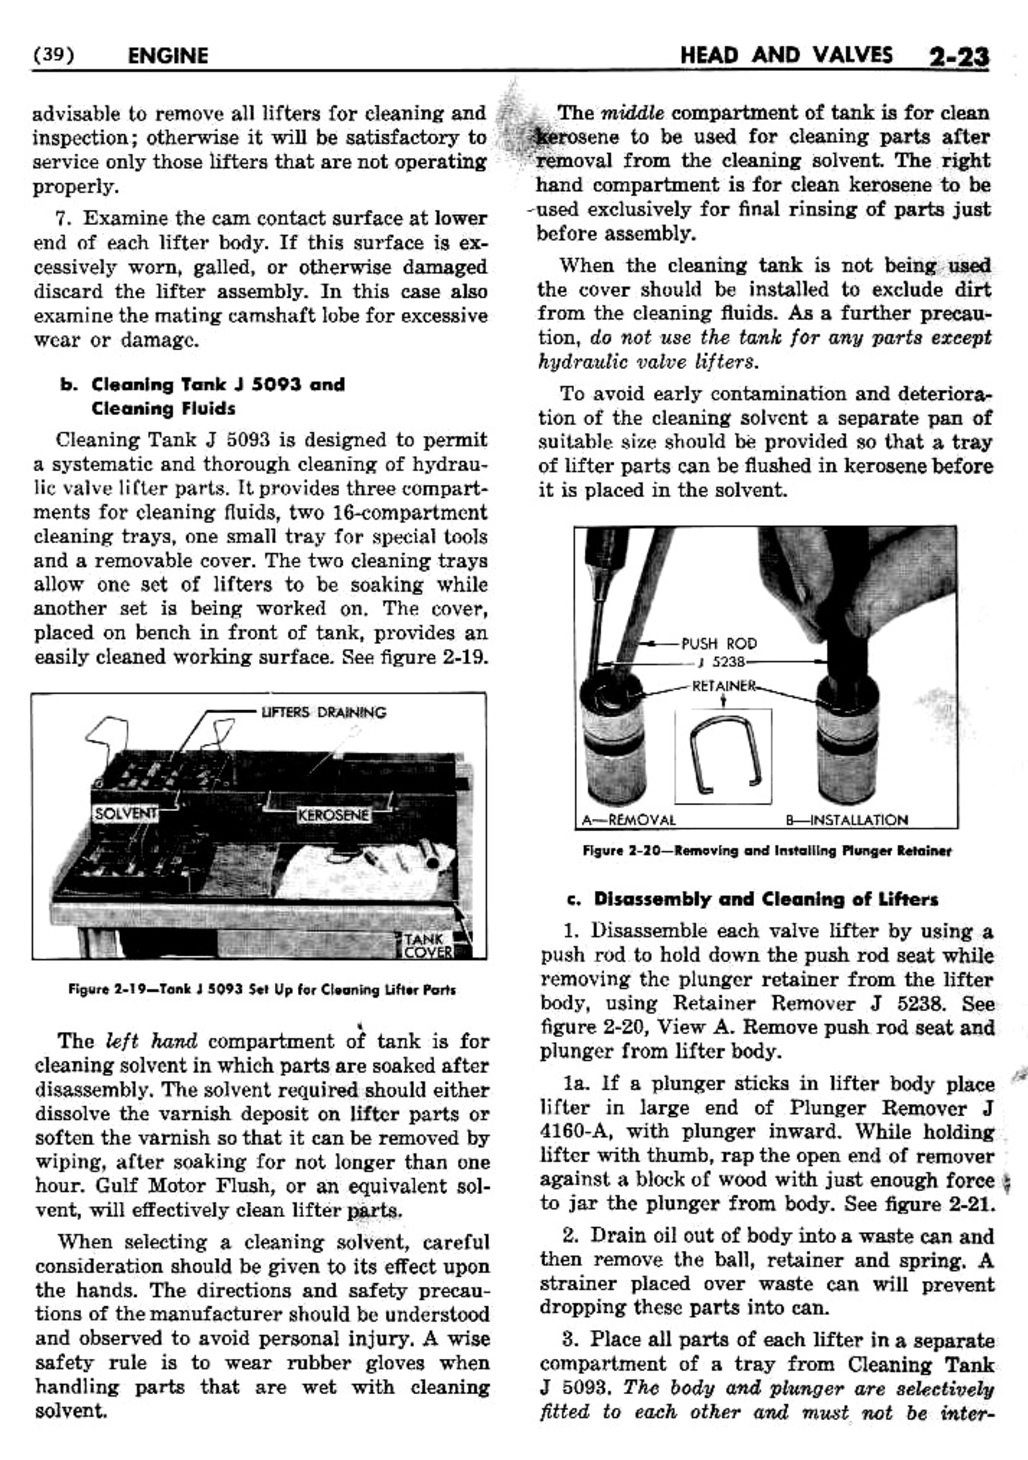 n_03 1955 Buick Shop Manual - Engine-023-023.jpg